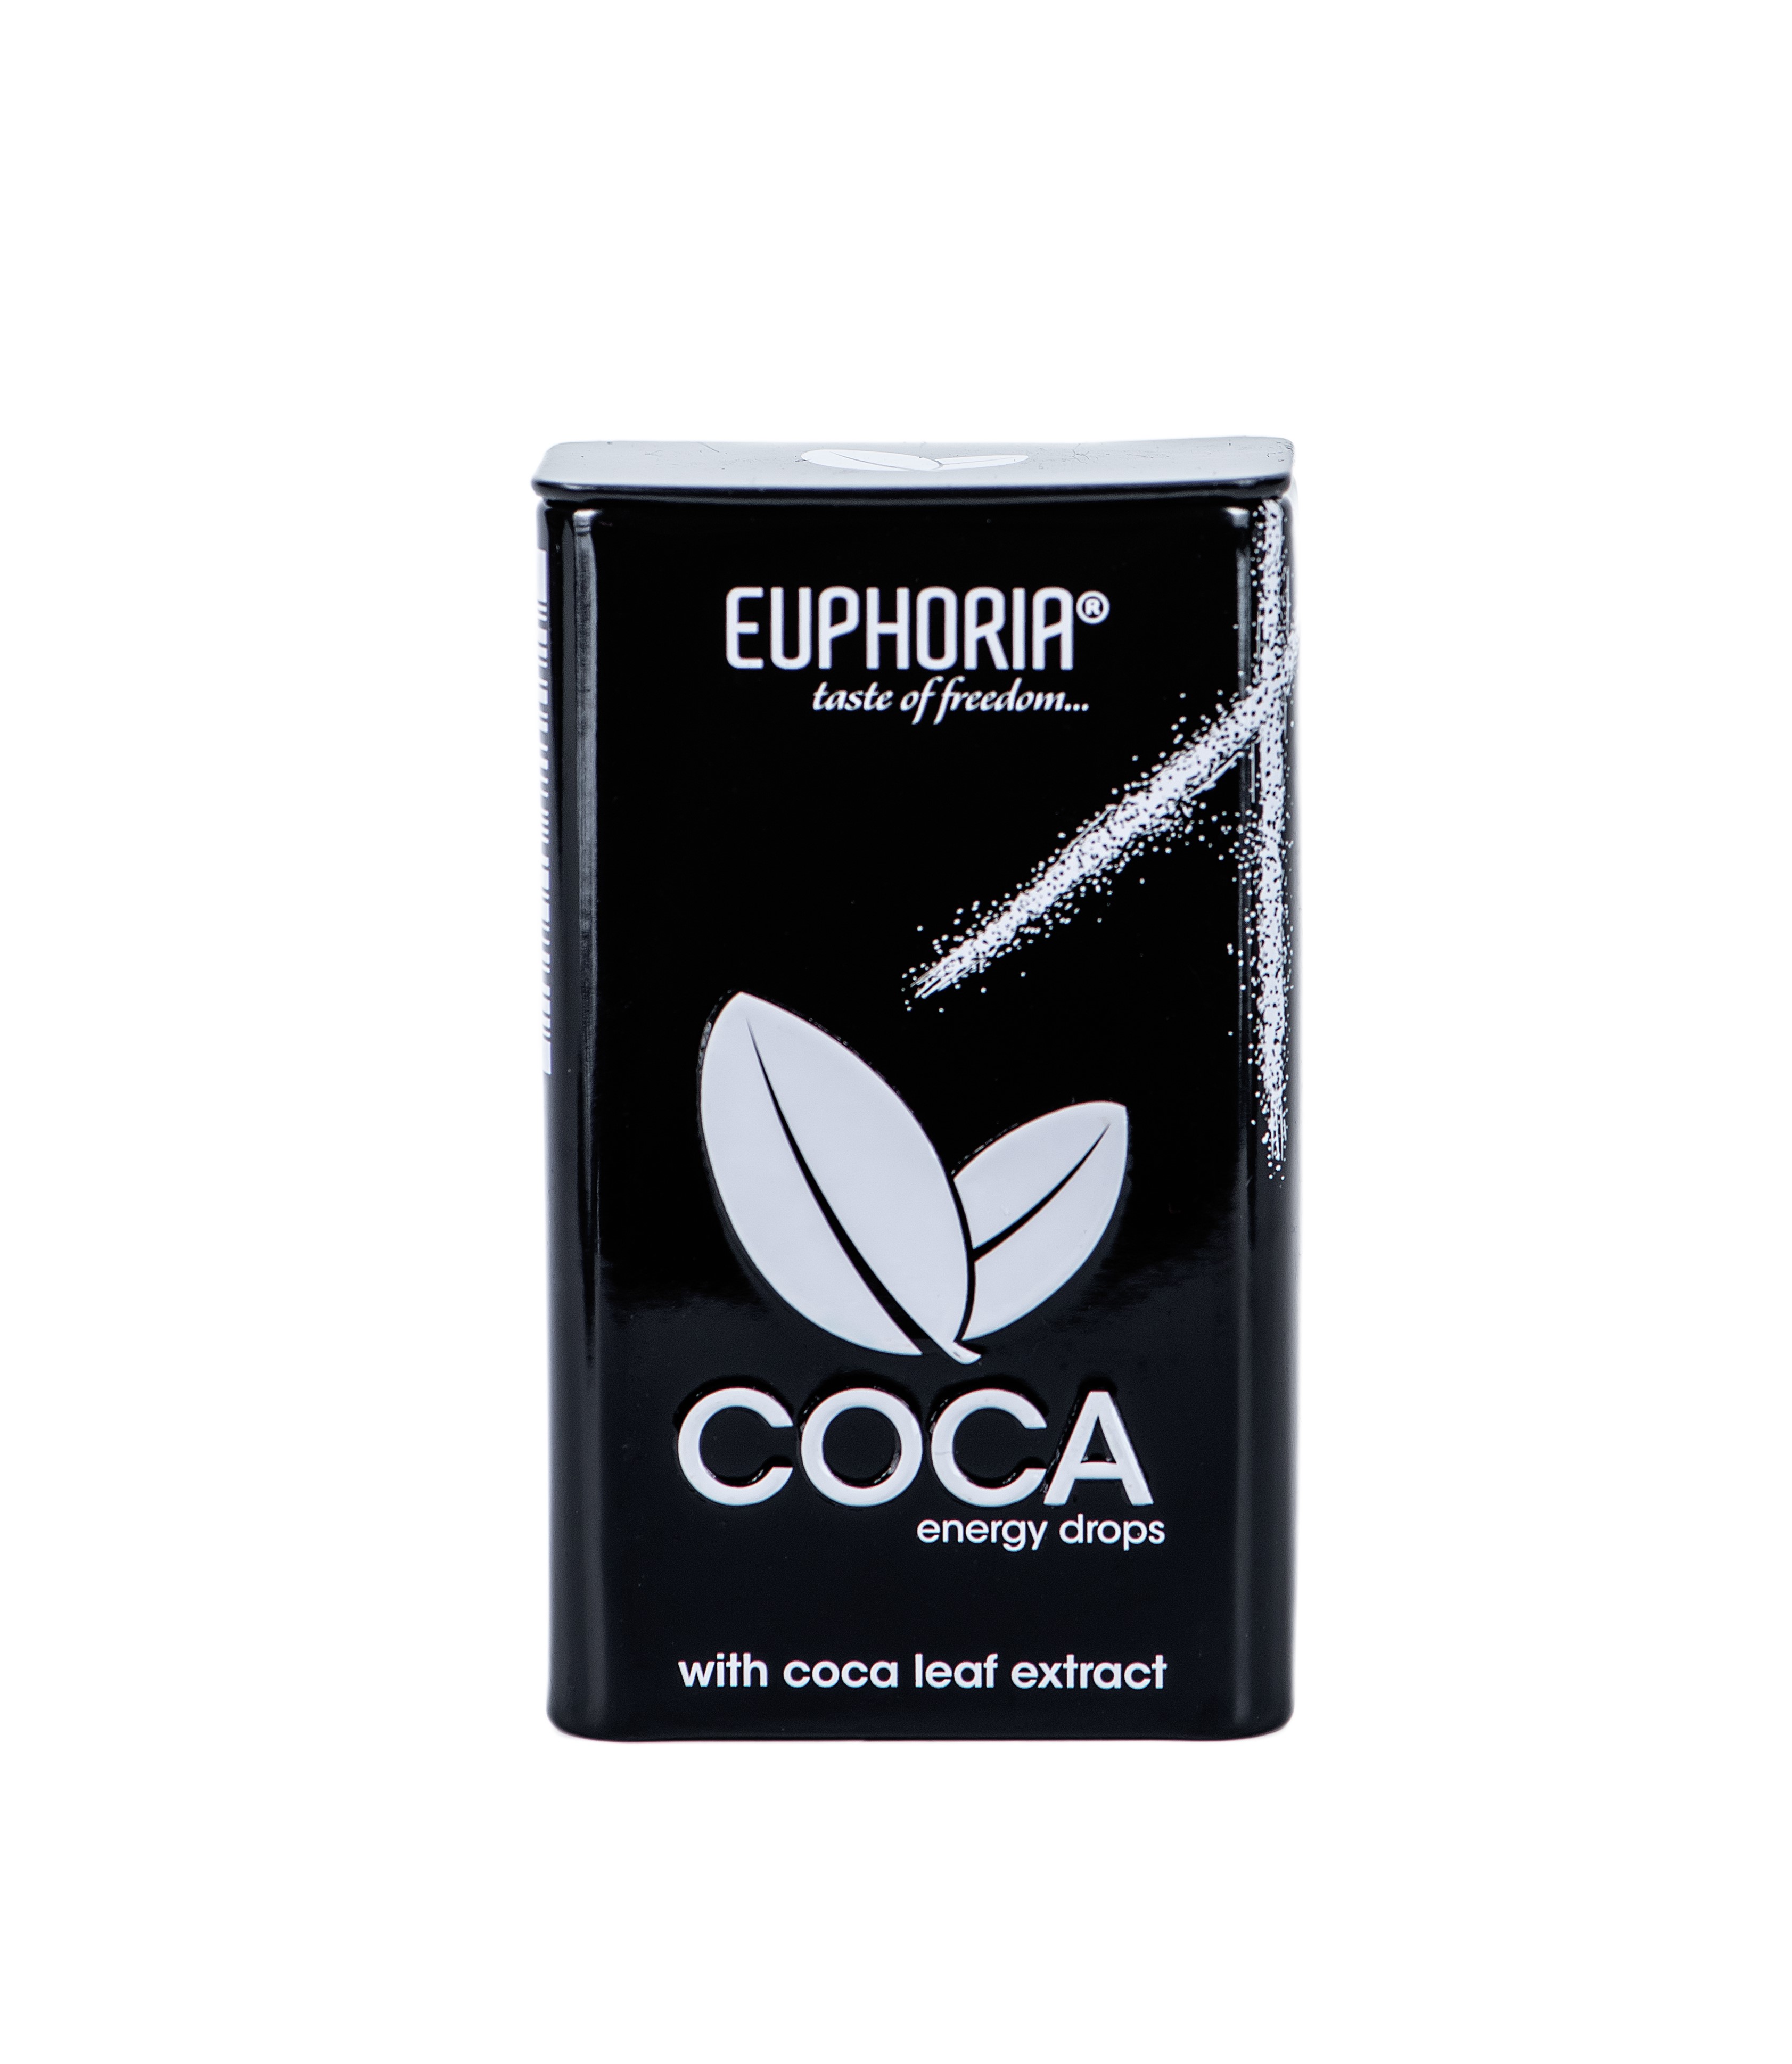 Euphoria Coca Energy Drops